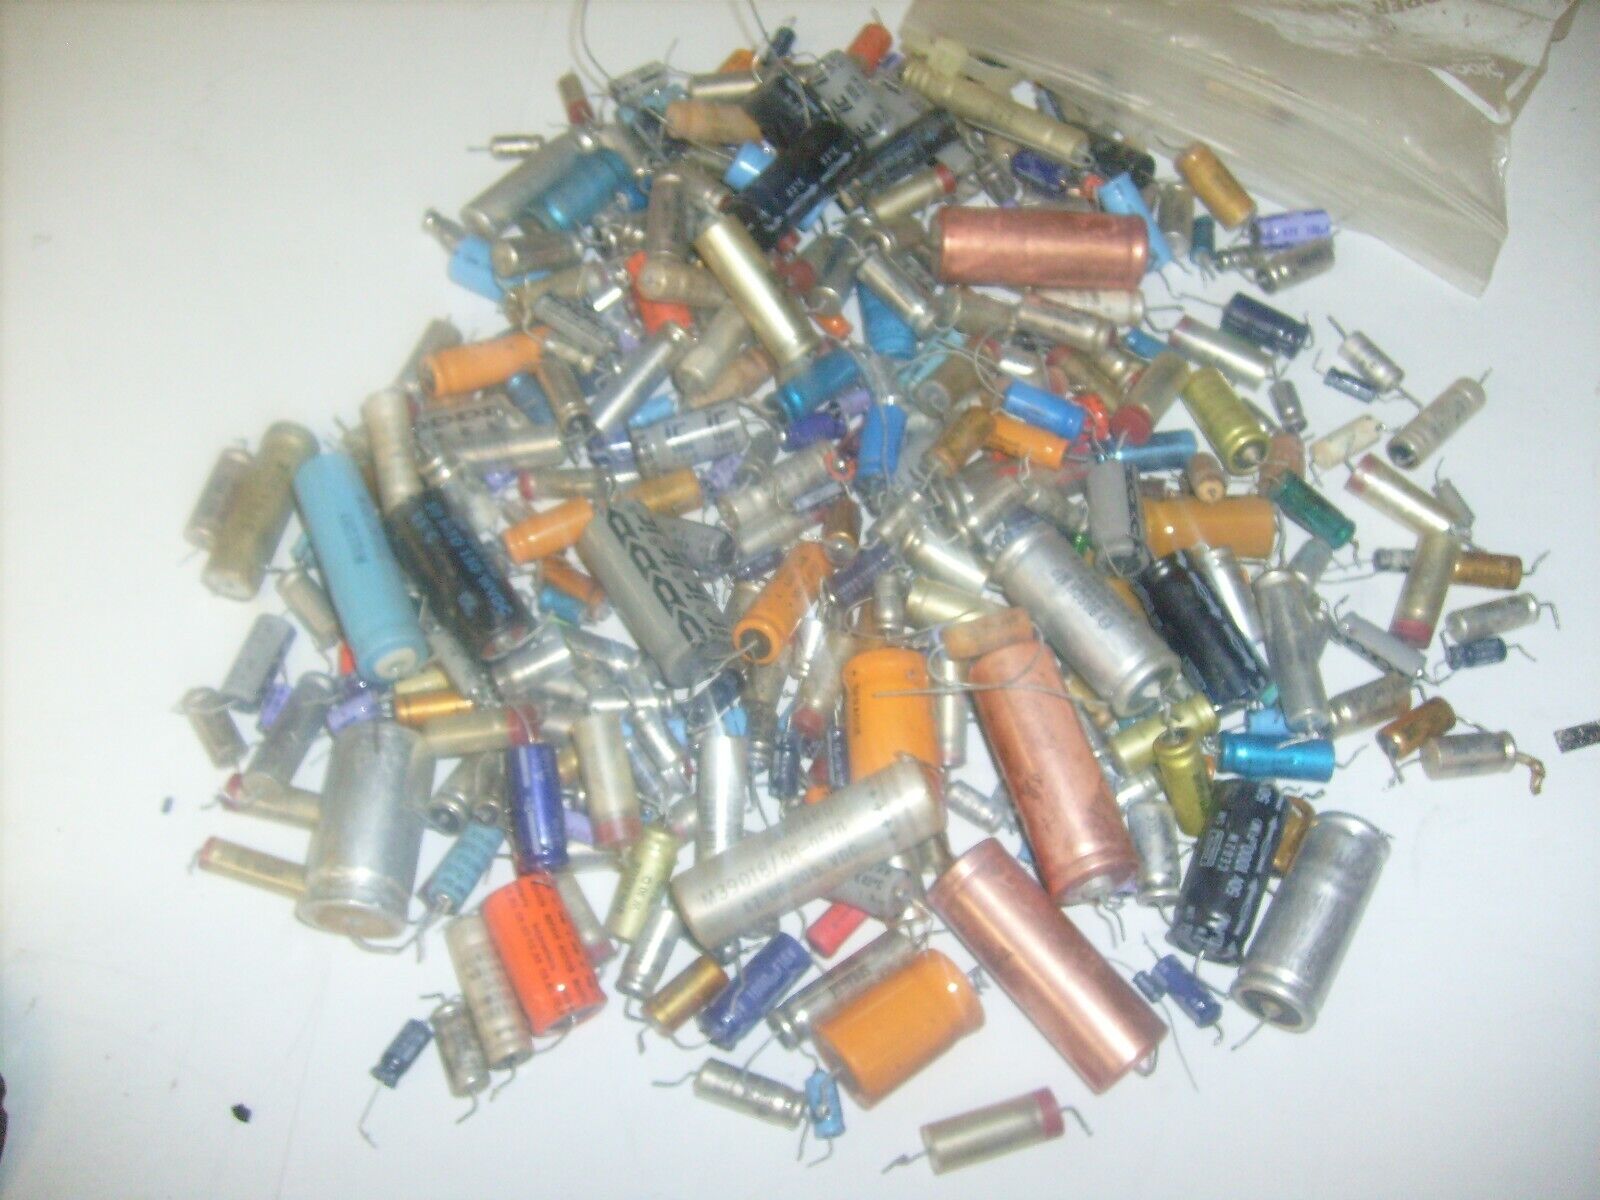 2 LB lot of vintage capacitors - Sprague Atom, Bosch Germany, Sangamo , Syncro